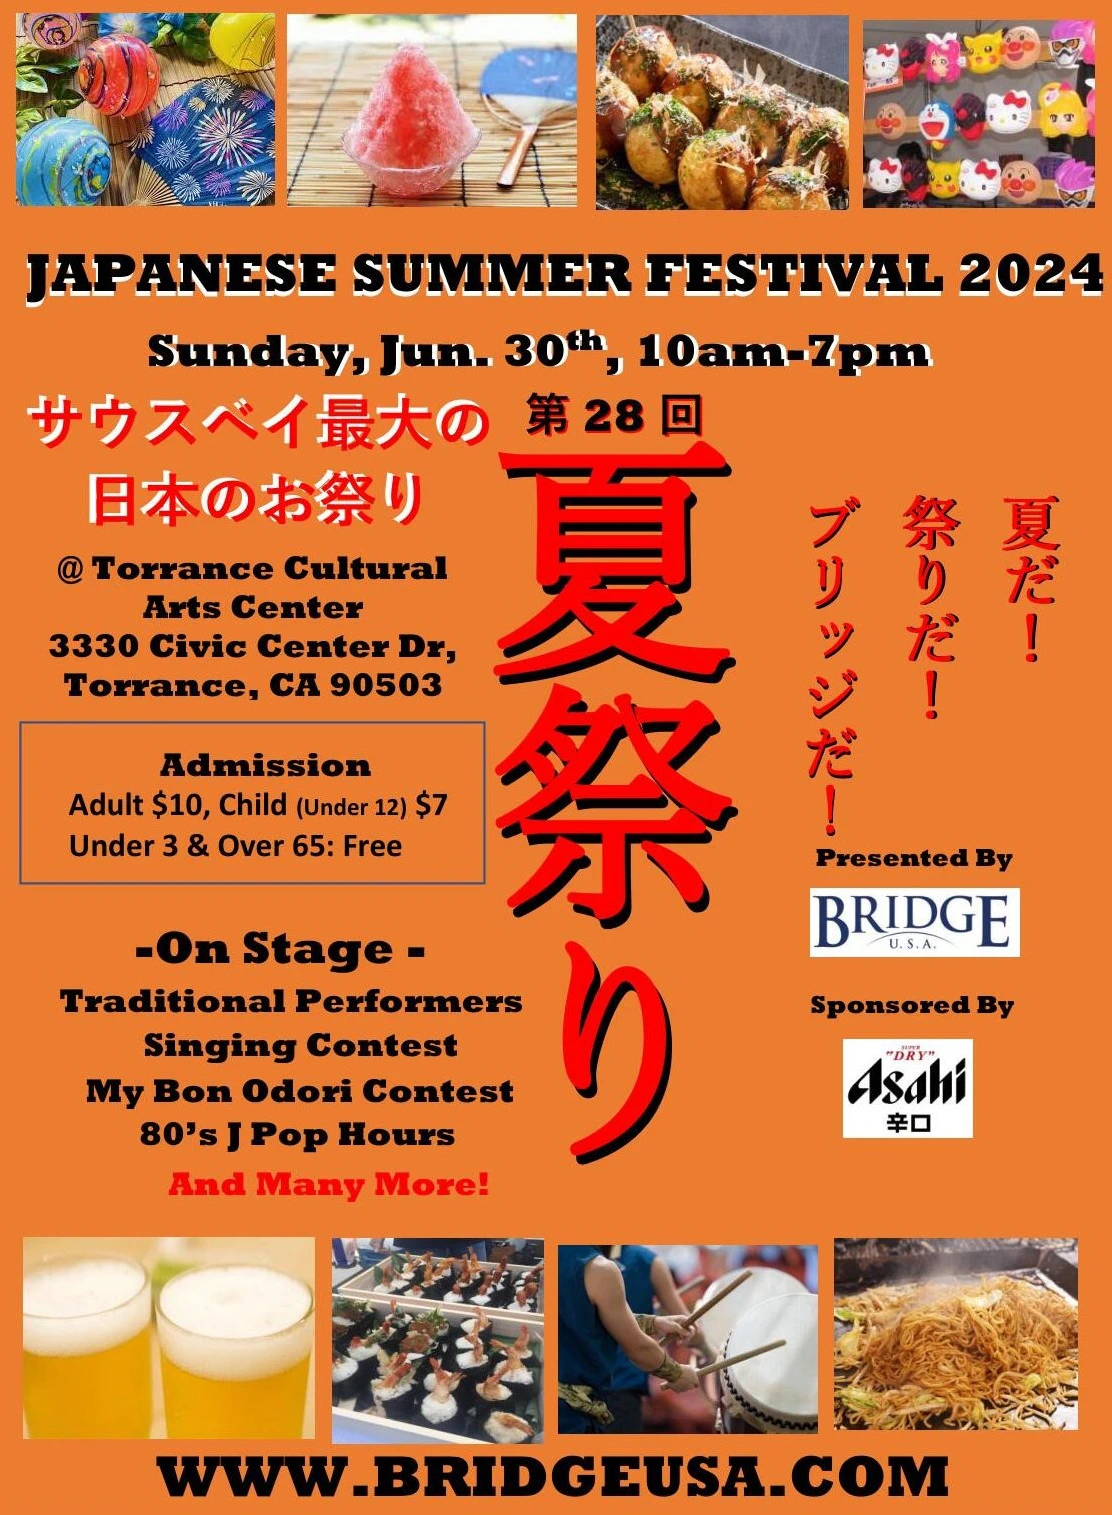 2023 Annual Bridge USA Natsu (Japanese Summer Festival Event) Matsuri (Japanese Food Booths, Performances, Exhibits) Torrance - ブリッジ USA 夏祭り (1 Day)